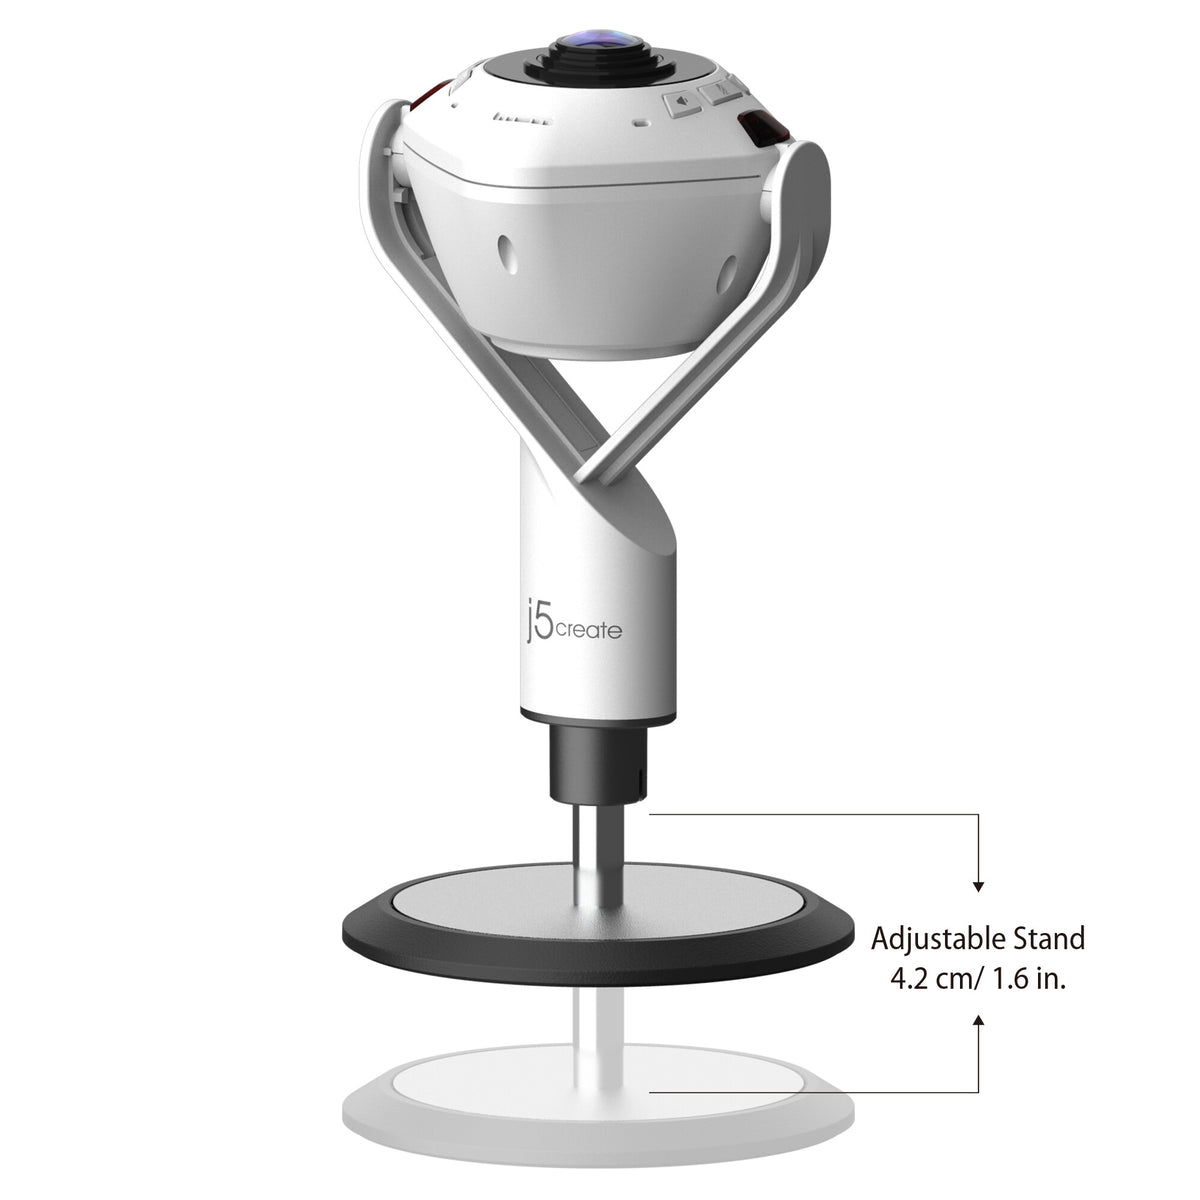 j5create JVU368 - USB Wired 360° AI-Powered 1080p Webcam with Speakerphone